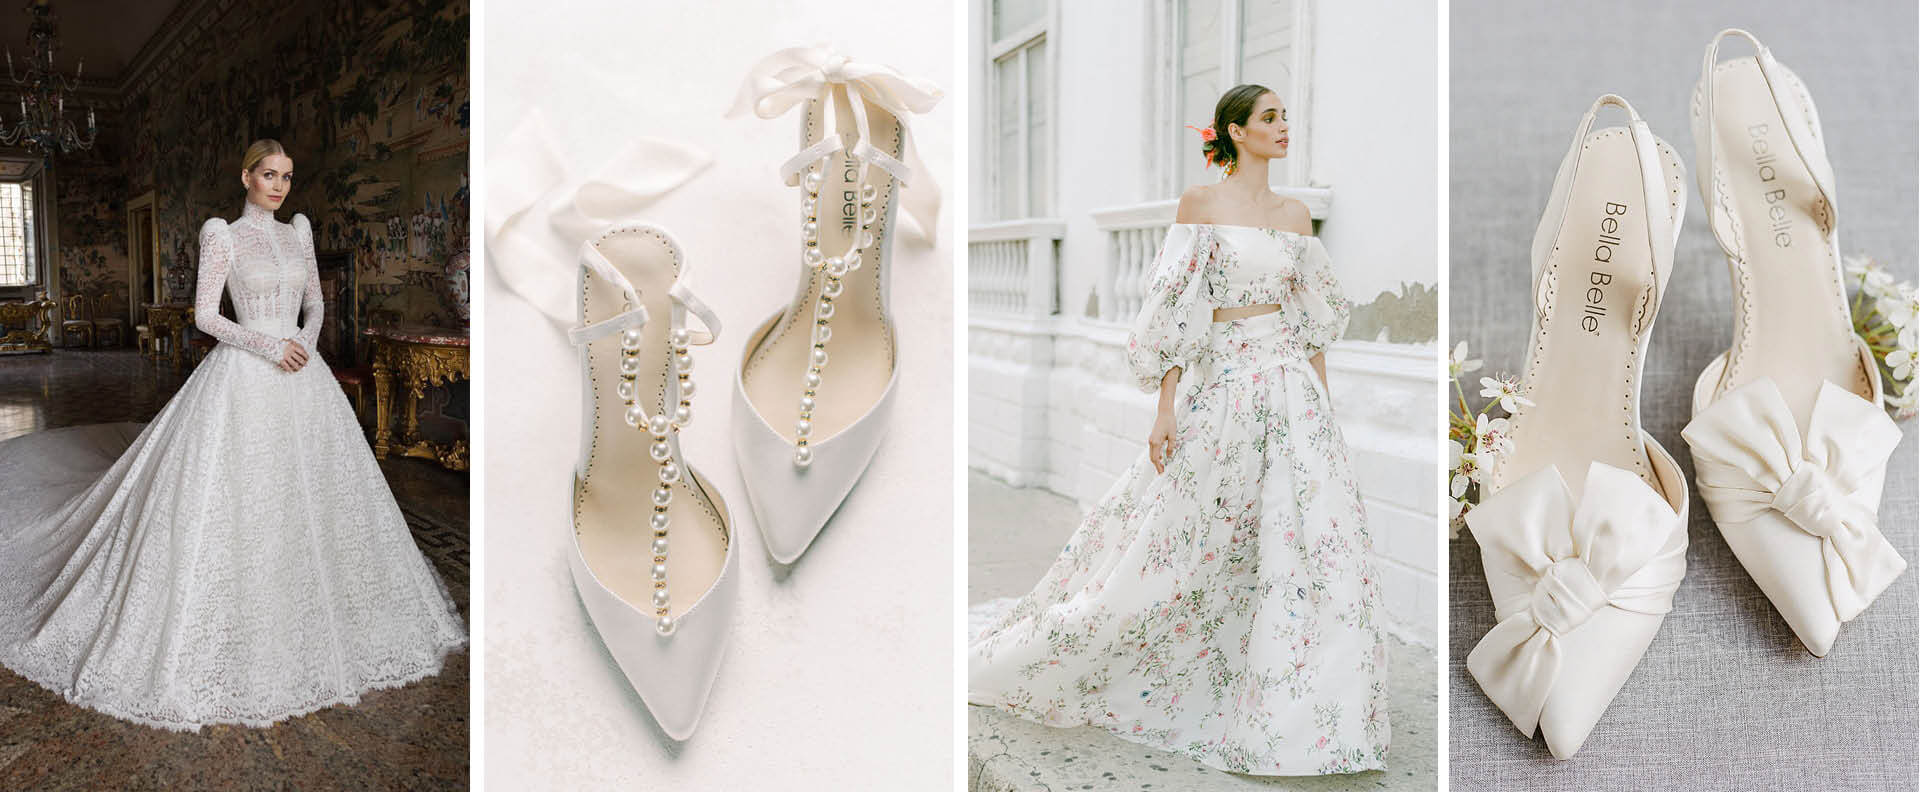 Paloma Blanca Style: Cinderella Inspired Shoes | Paloma Blanca